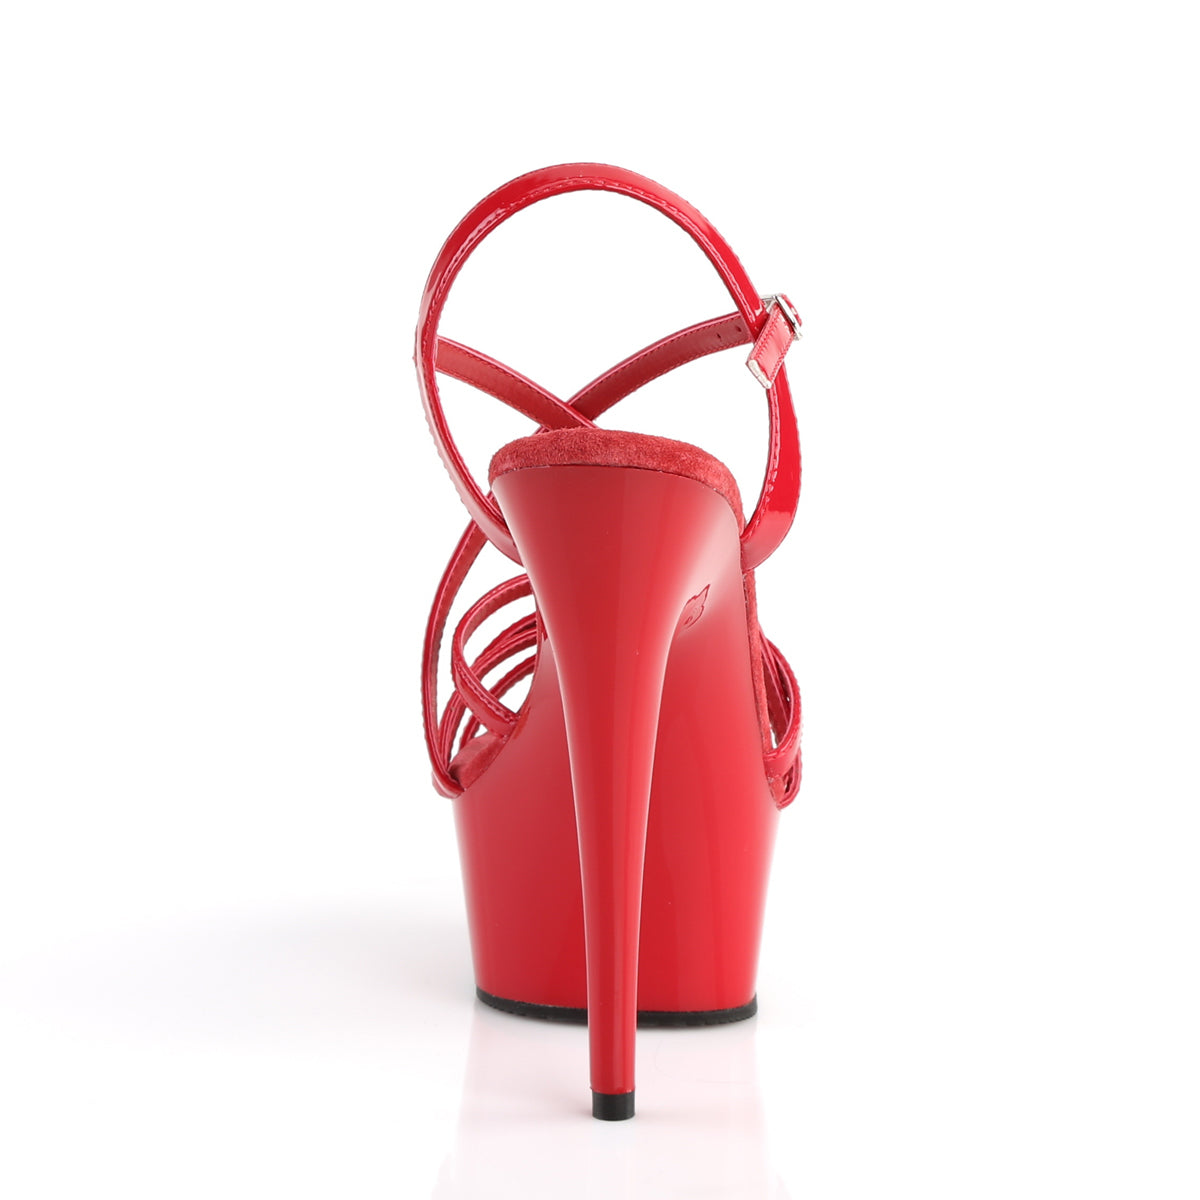 DELIGHT-613 Pleaser 6 Inch Heel Red Pole Dancing Platforms-Pleaser- Sexy Shoes Fetish Footwear